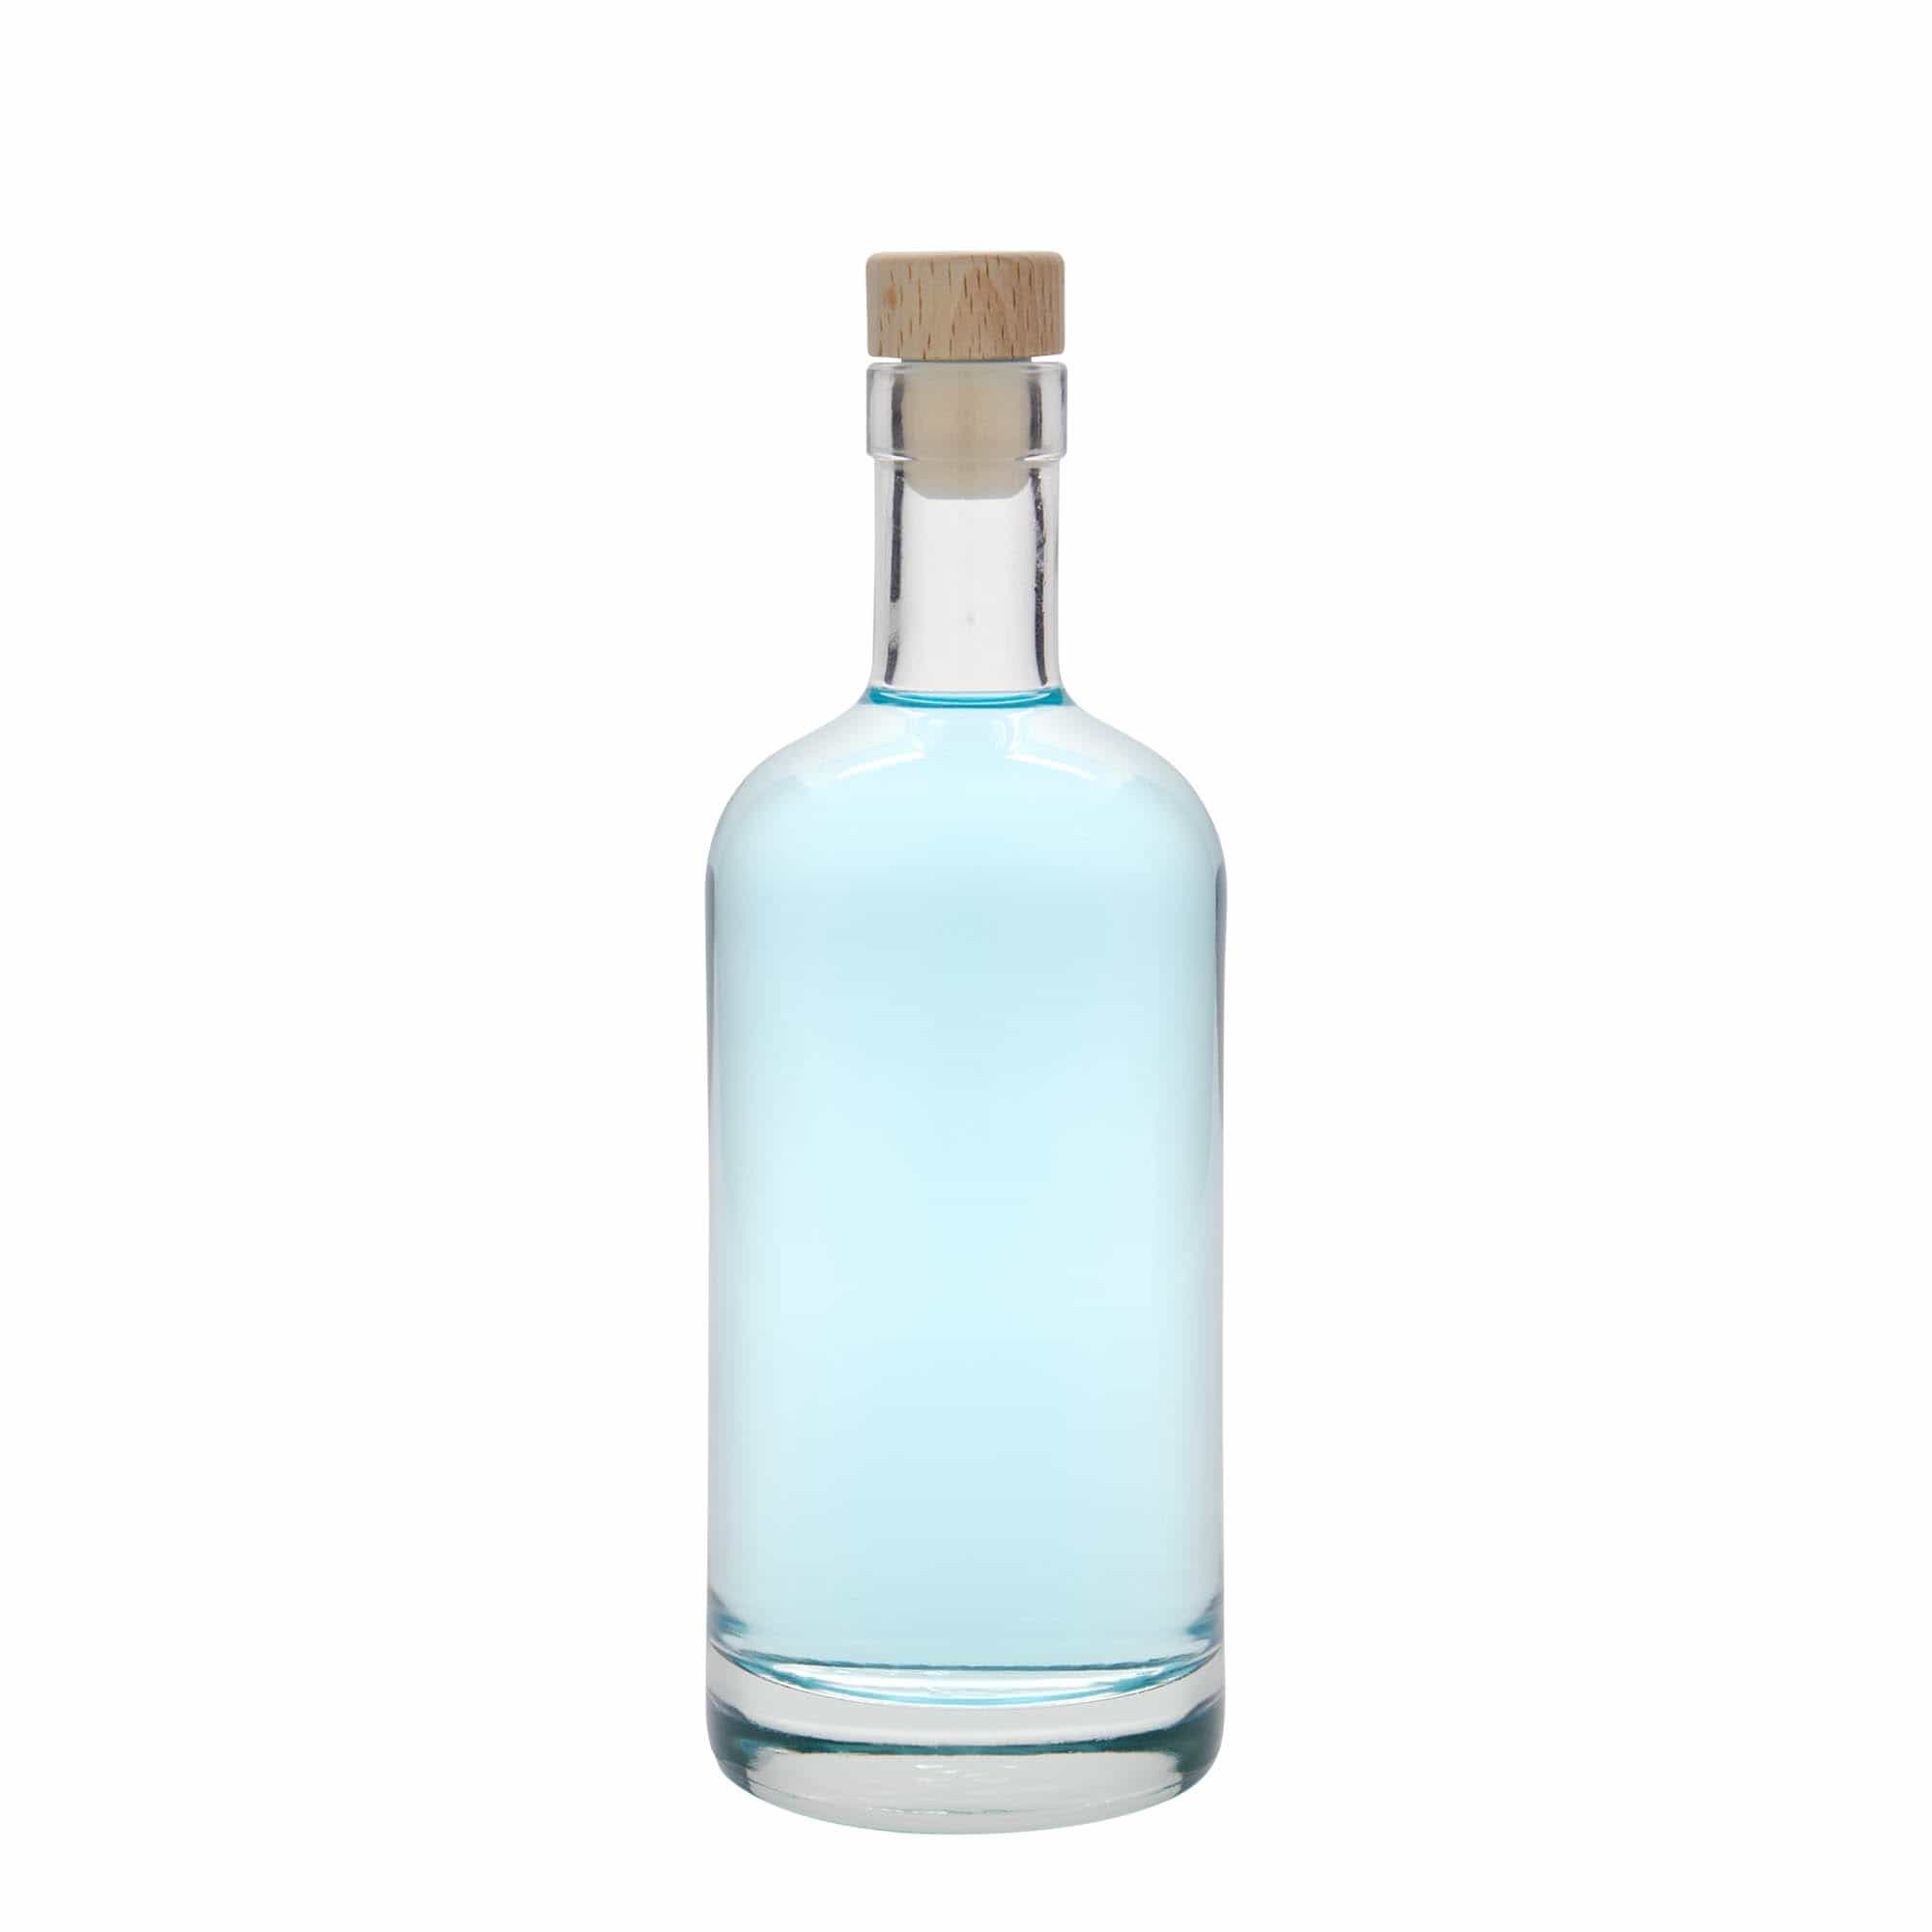 Botella de vidrio 'Linea Uno' de 500 ml, boca: corcho